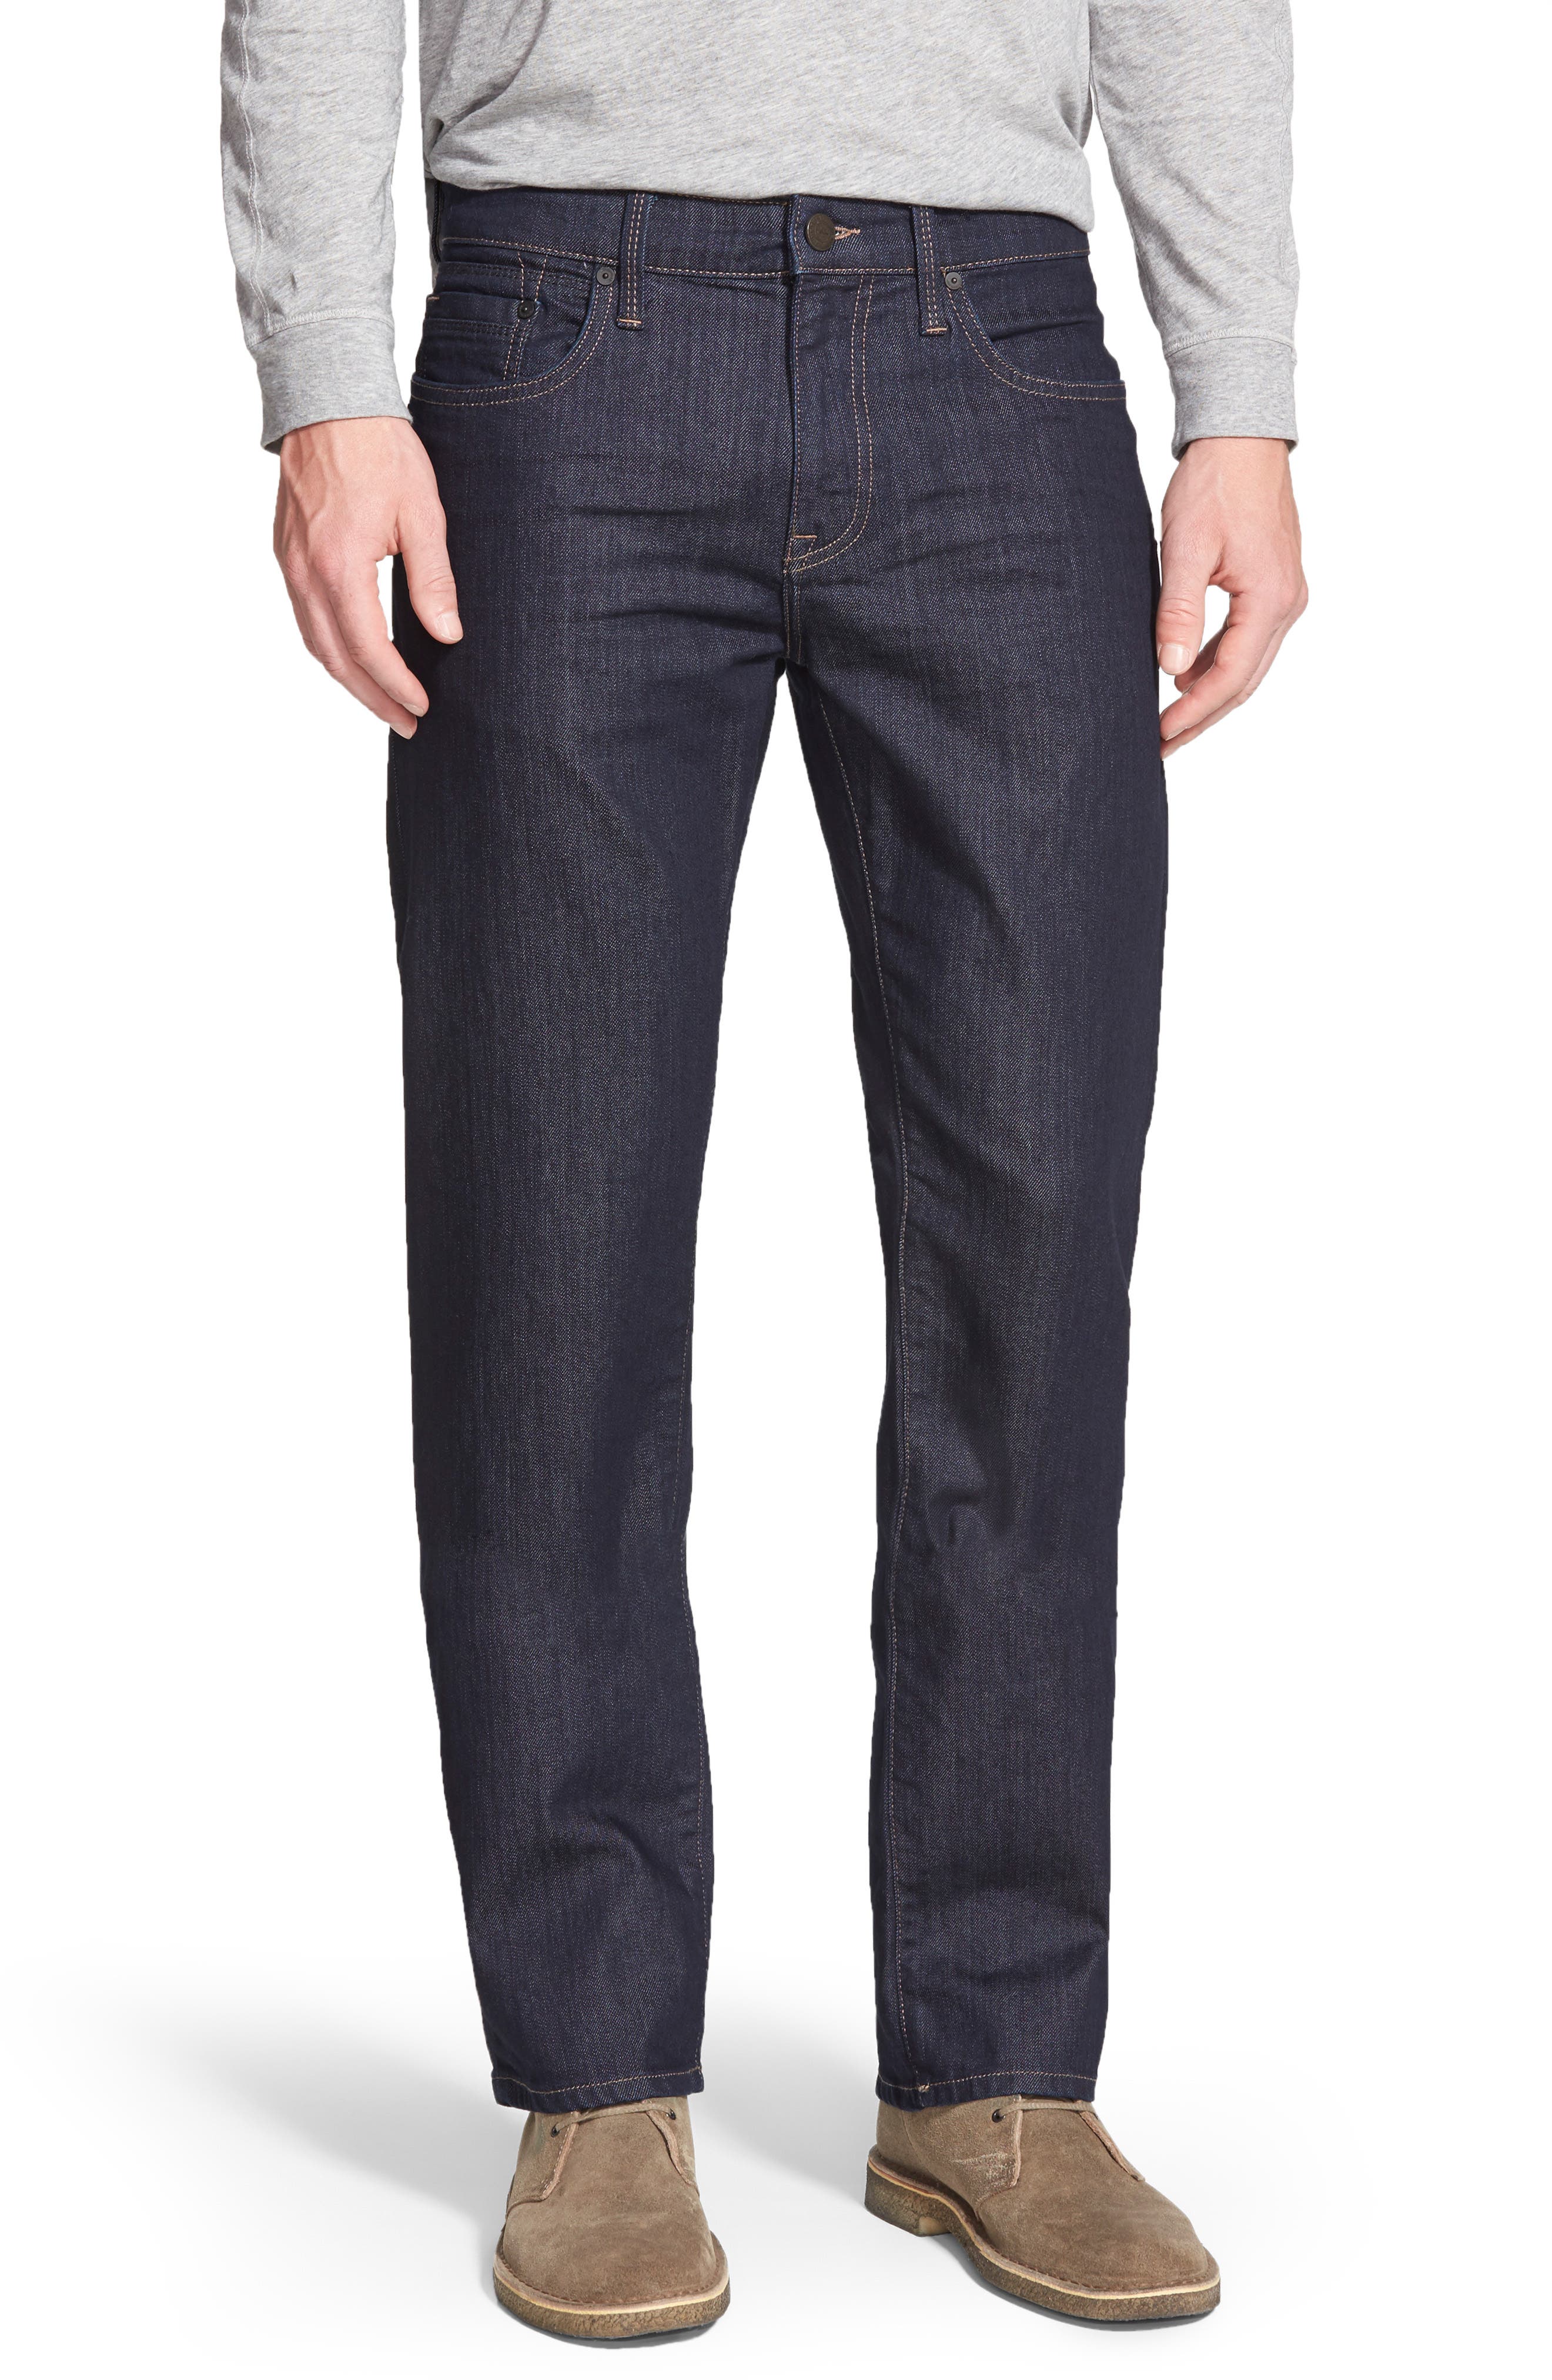 Men's Enzo Designer Jeans Regular Fit Denim Pants Big & Tall All Waist Sizes 